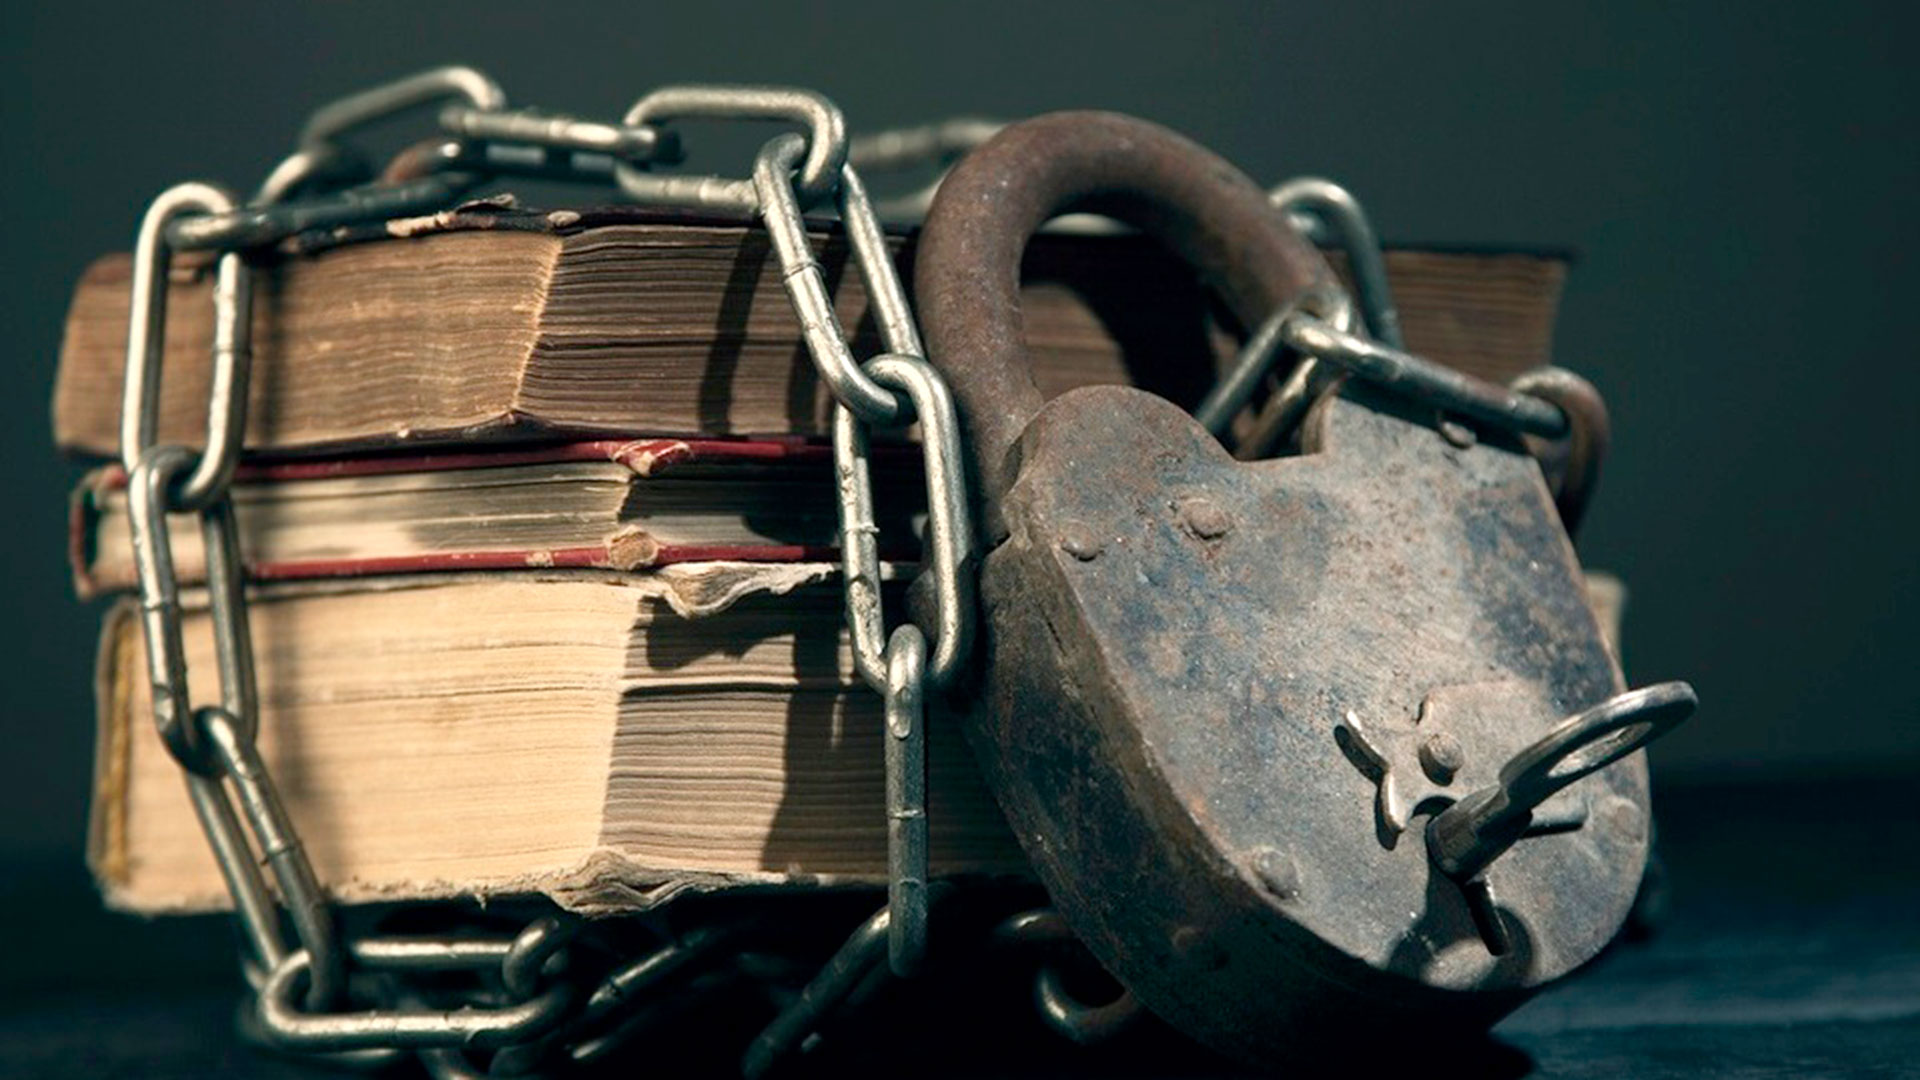 Censura en Estados Unidos: crean un “Santuario de Libros Prohibidos” donde regalan los textos vetados